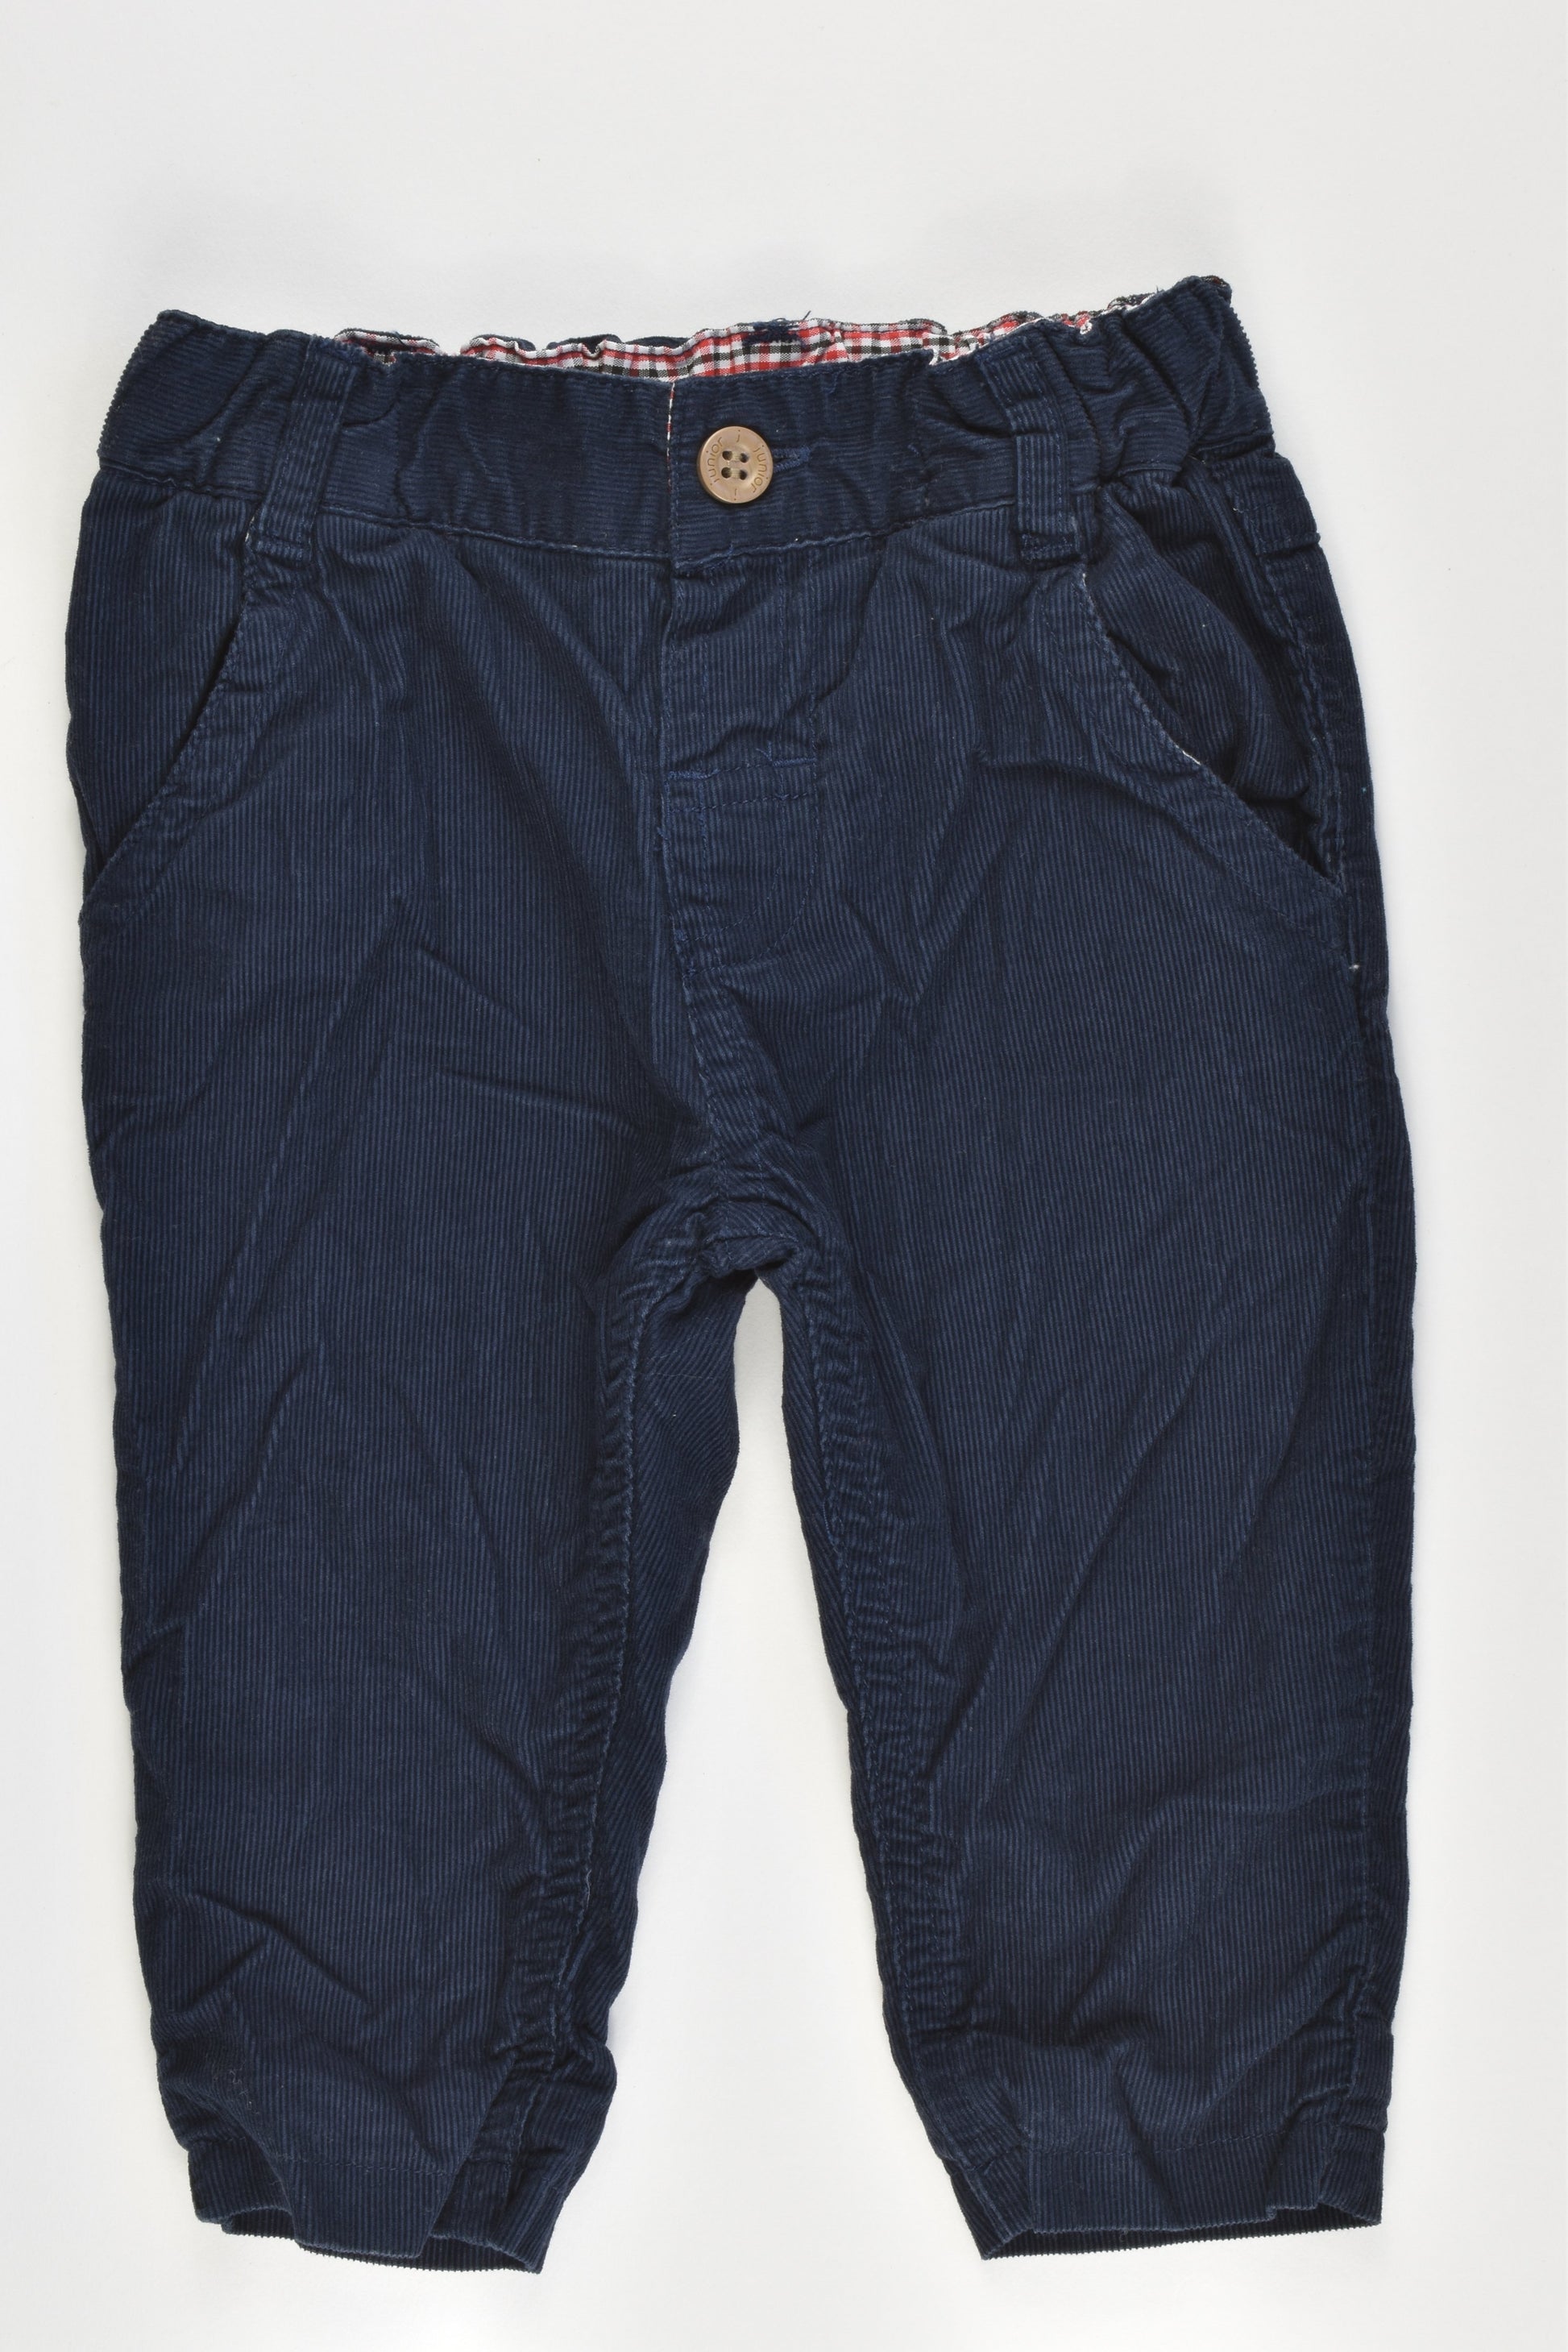 Debenhams Size 000-00 (3-6 months) Pants